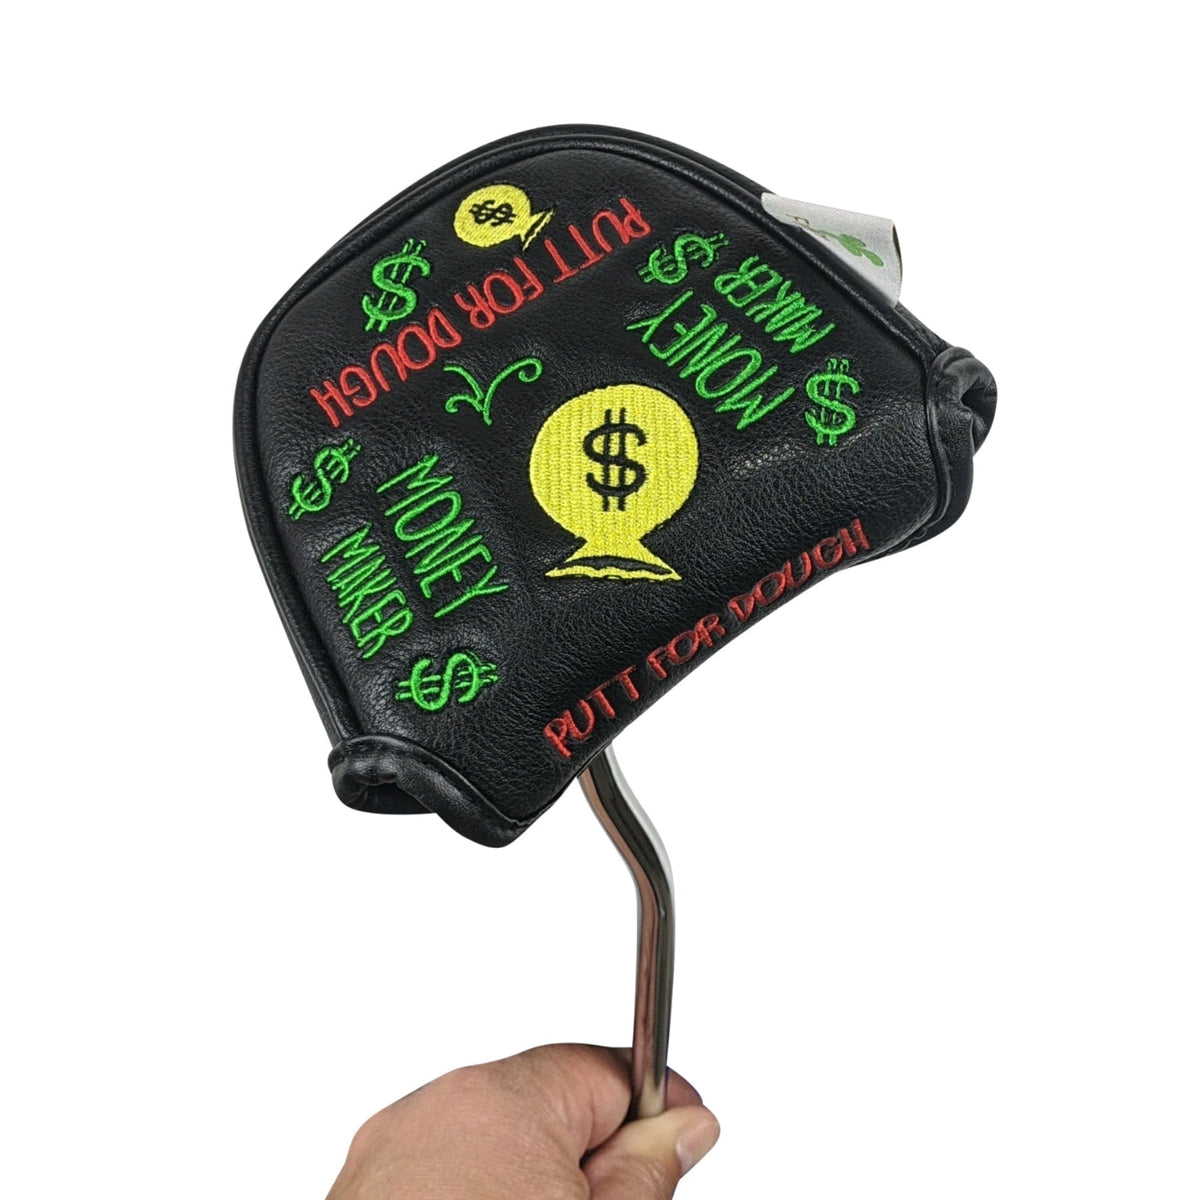 Putt for Dough - Money Maker - MALLET Putter Headcover (Black)